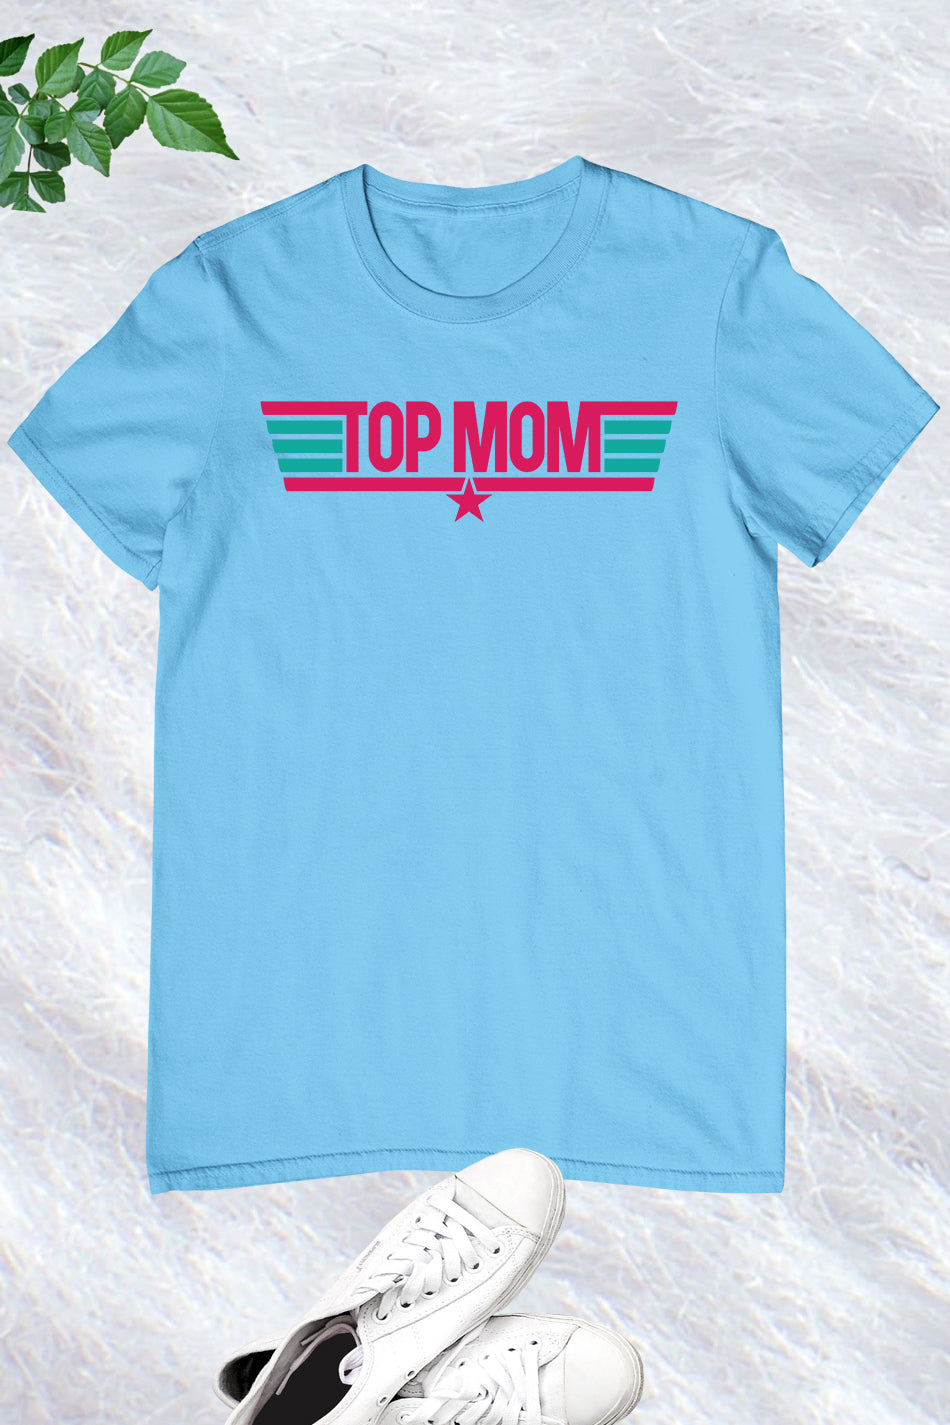 Top Mom Shirt